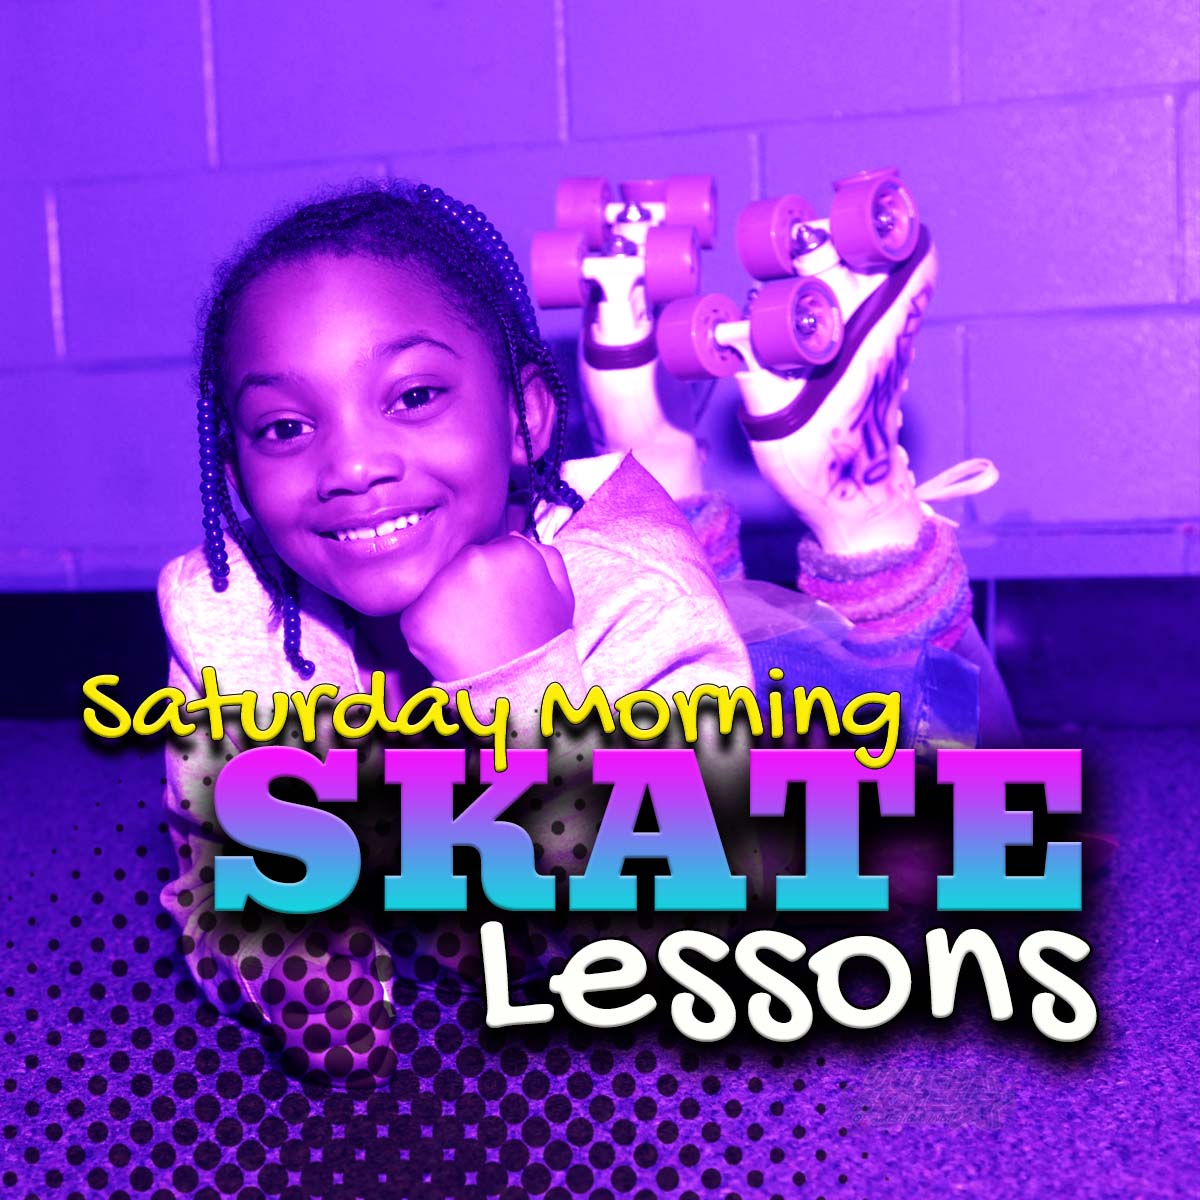 Saturday Skating Lessons